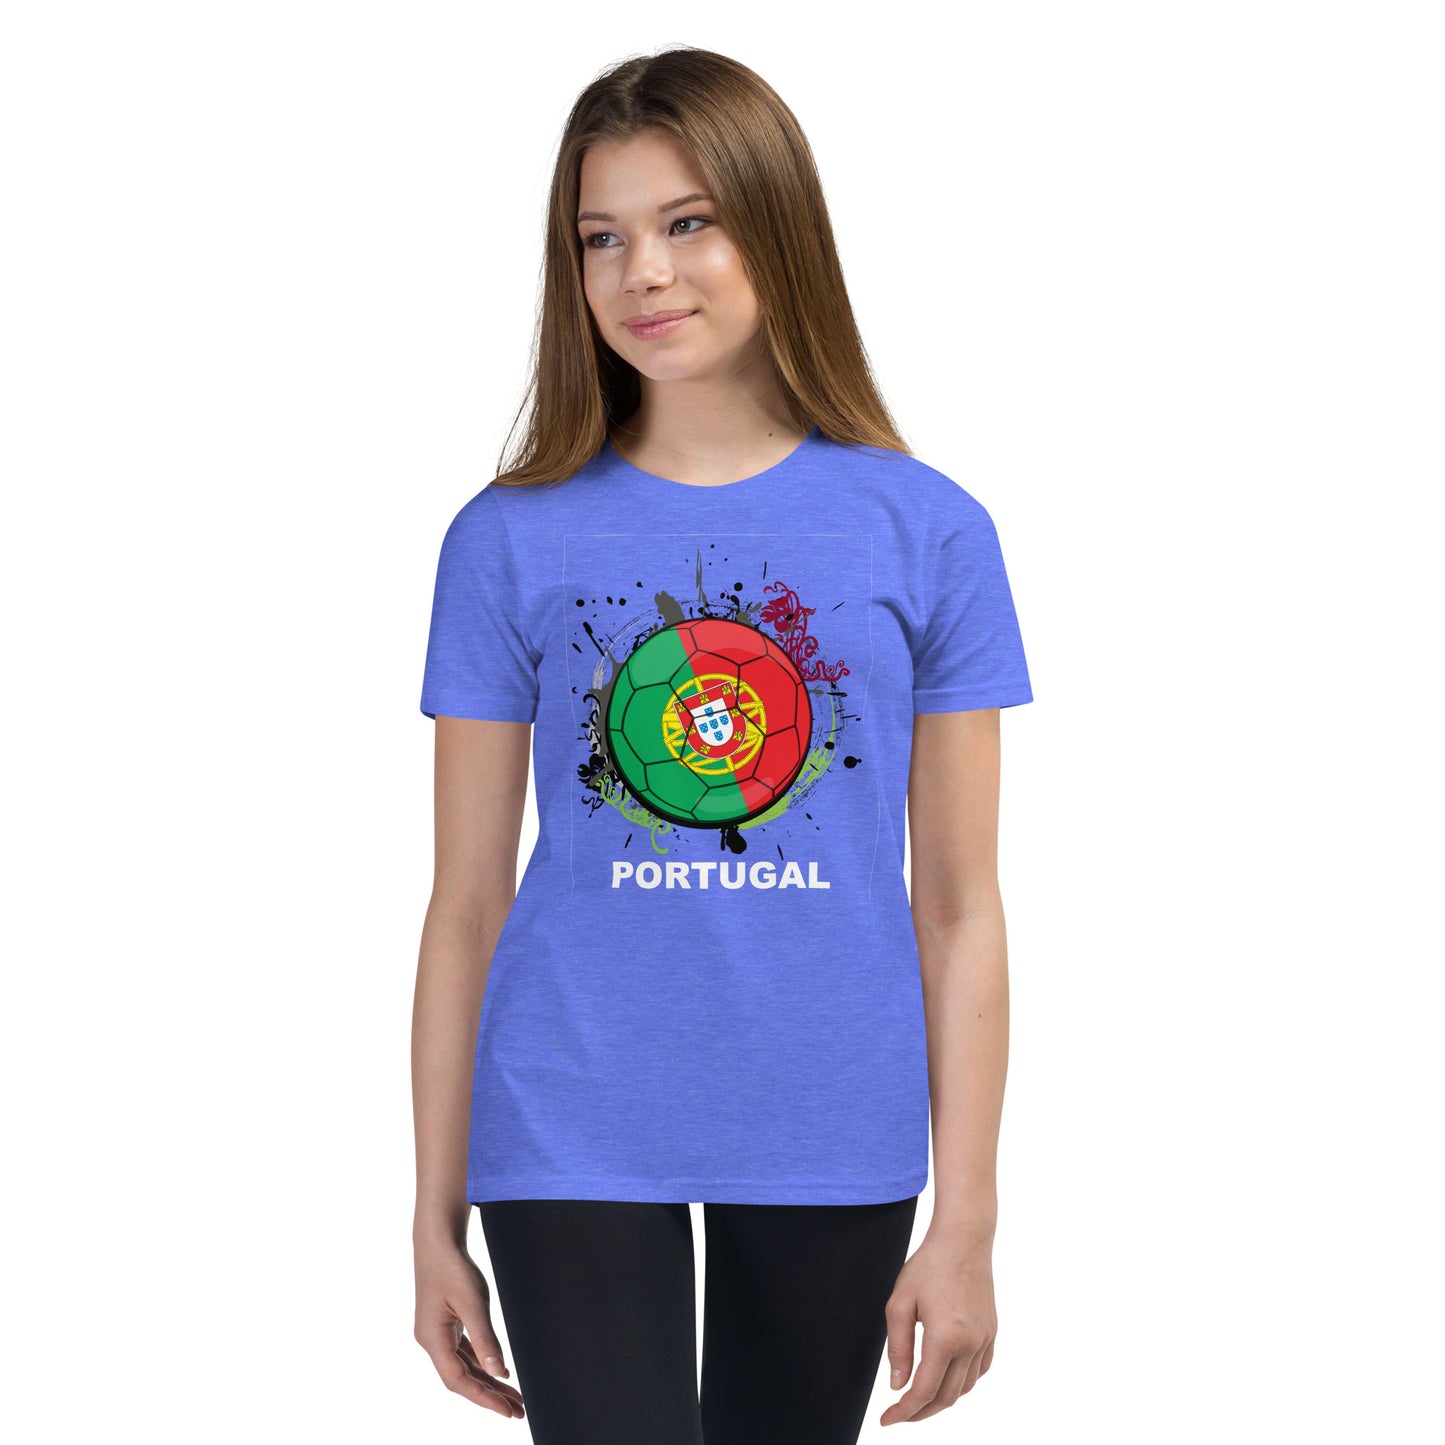 Portugal Rico Soccer Youth Short Sleeve T-Shirt - darks